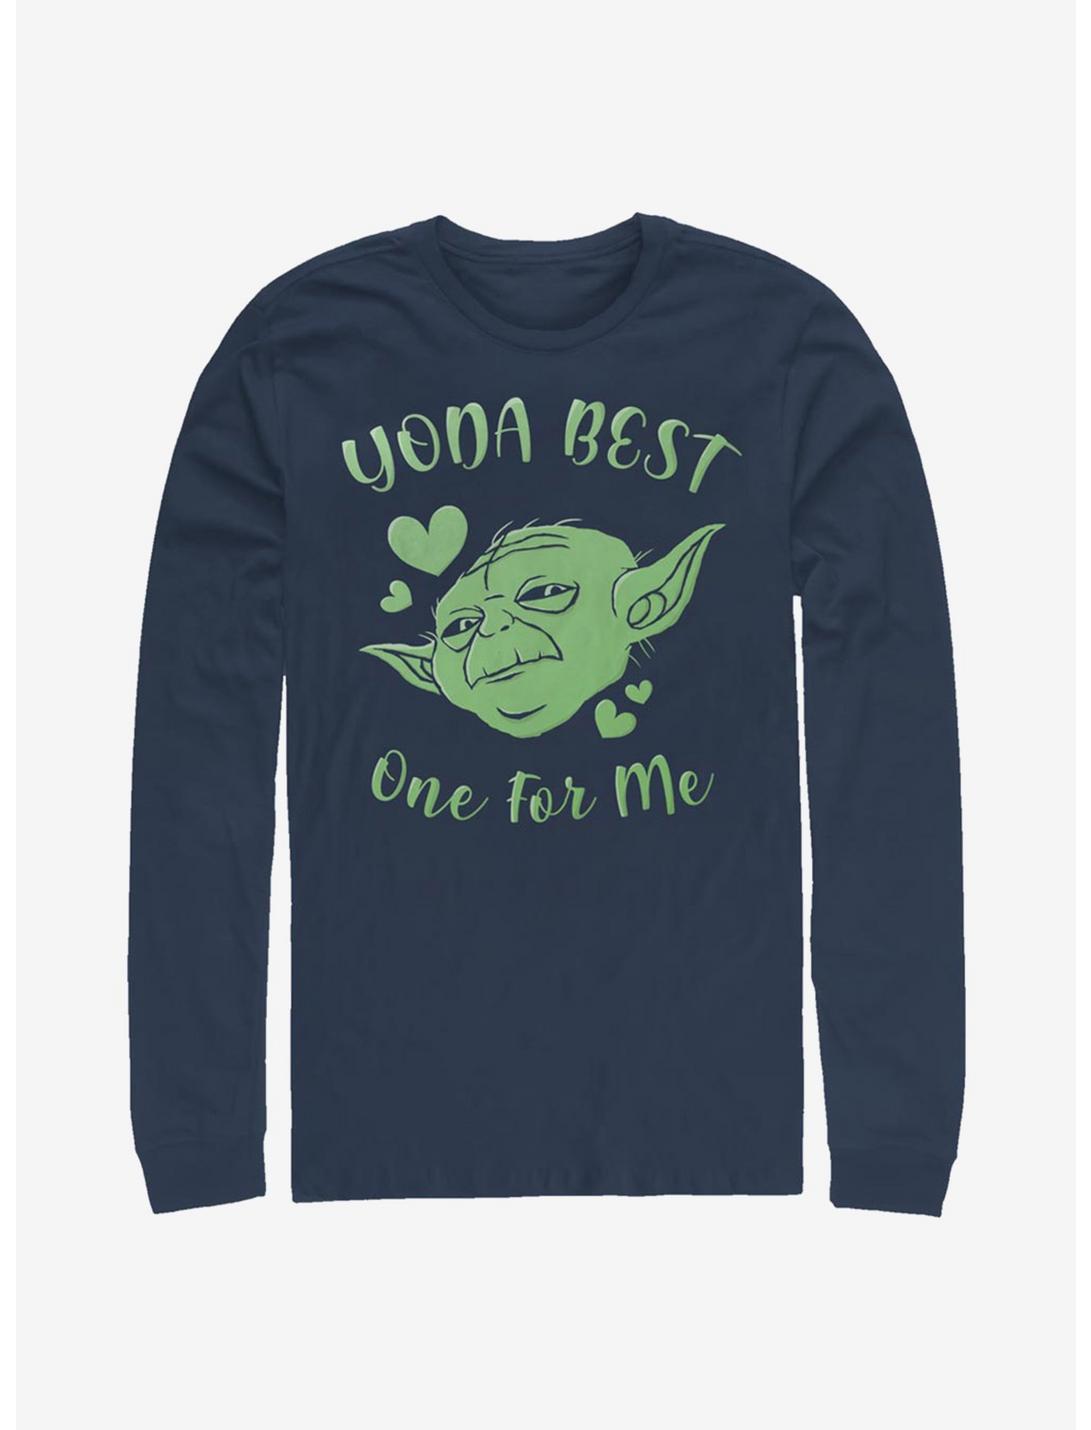 Star Wars Yoda Best Hearts Long-Sleeve T-Shirt, NAVY, hi-res